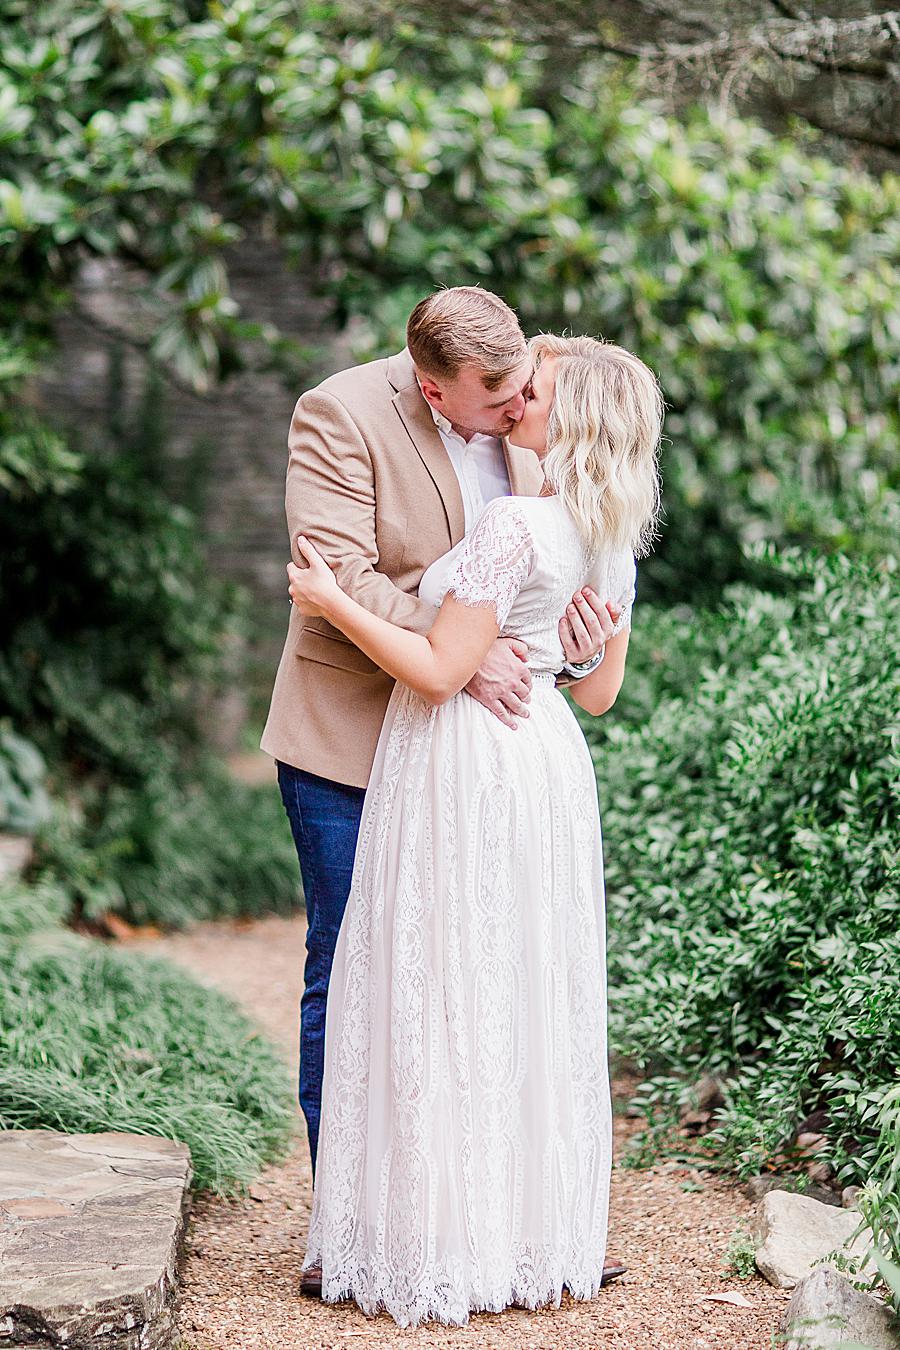 Arms around waist by Knoxville Wedding Photographer, Amanda May Photos.